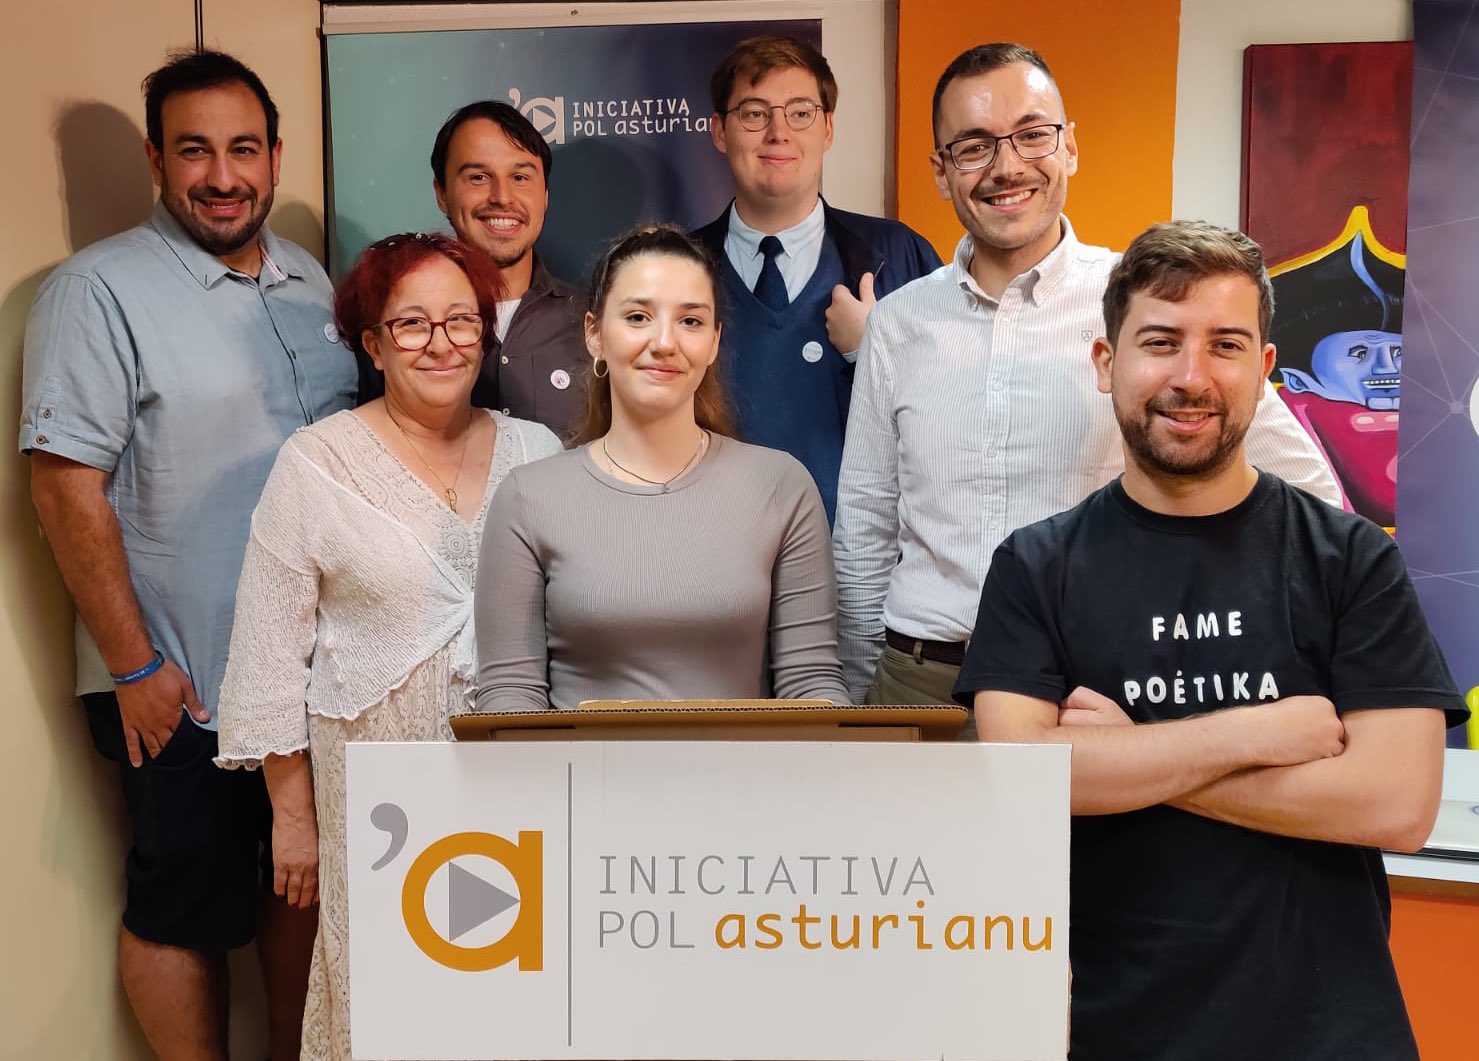 Xunta Directiva Iniciativa pol Asturianu